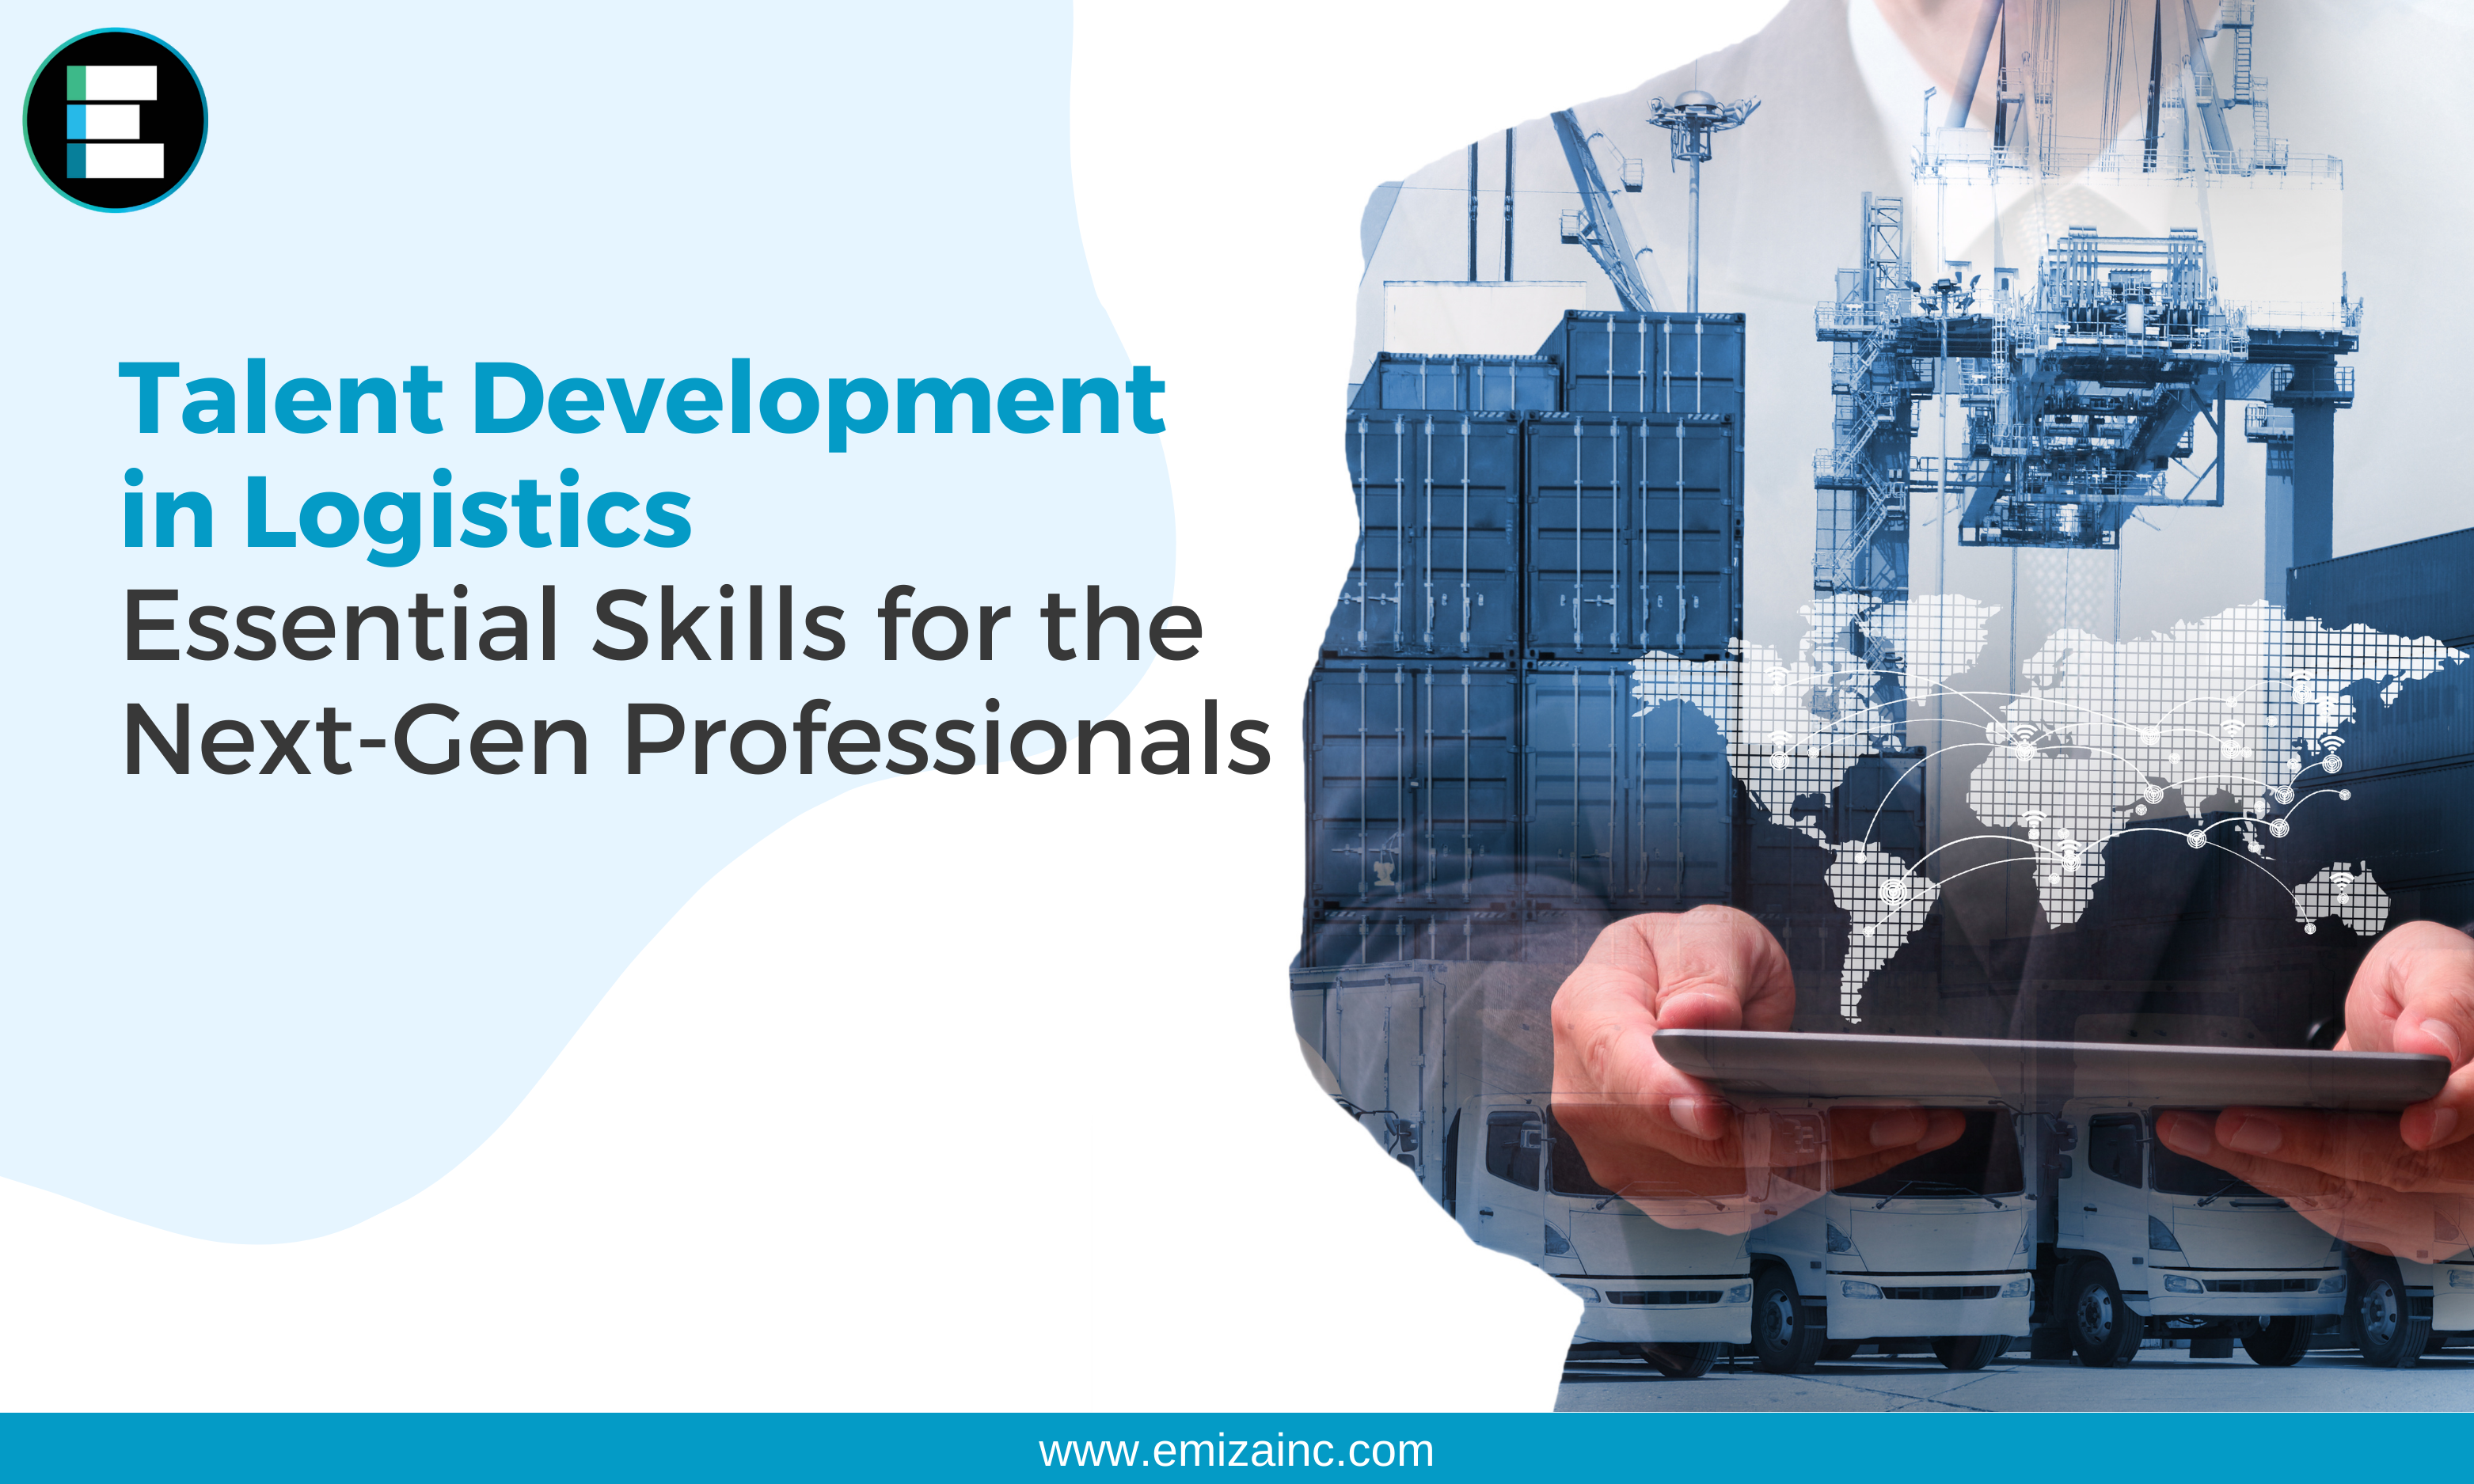 Talent Development in Logistics: Essential Skills for the Next-Gen Professionals